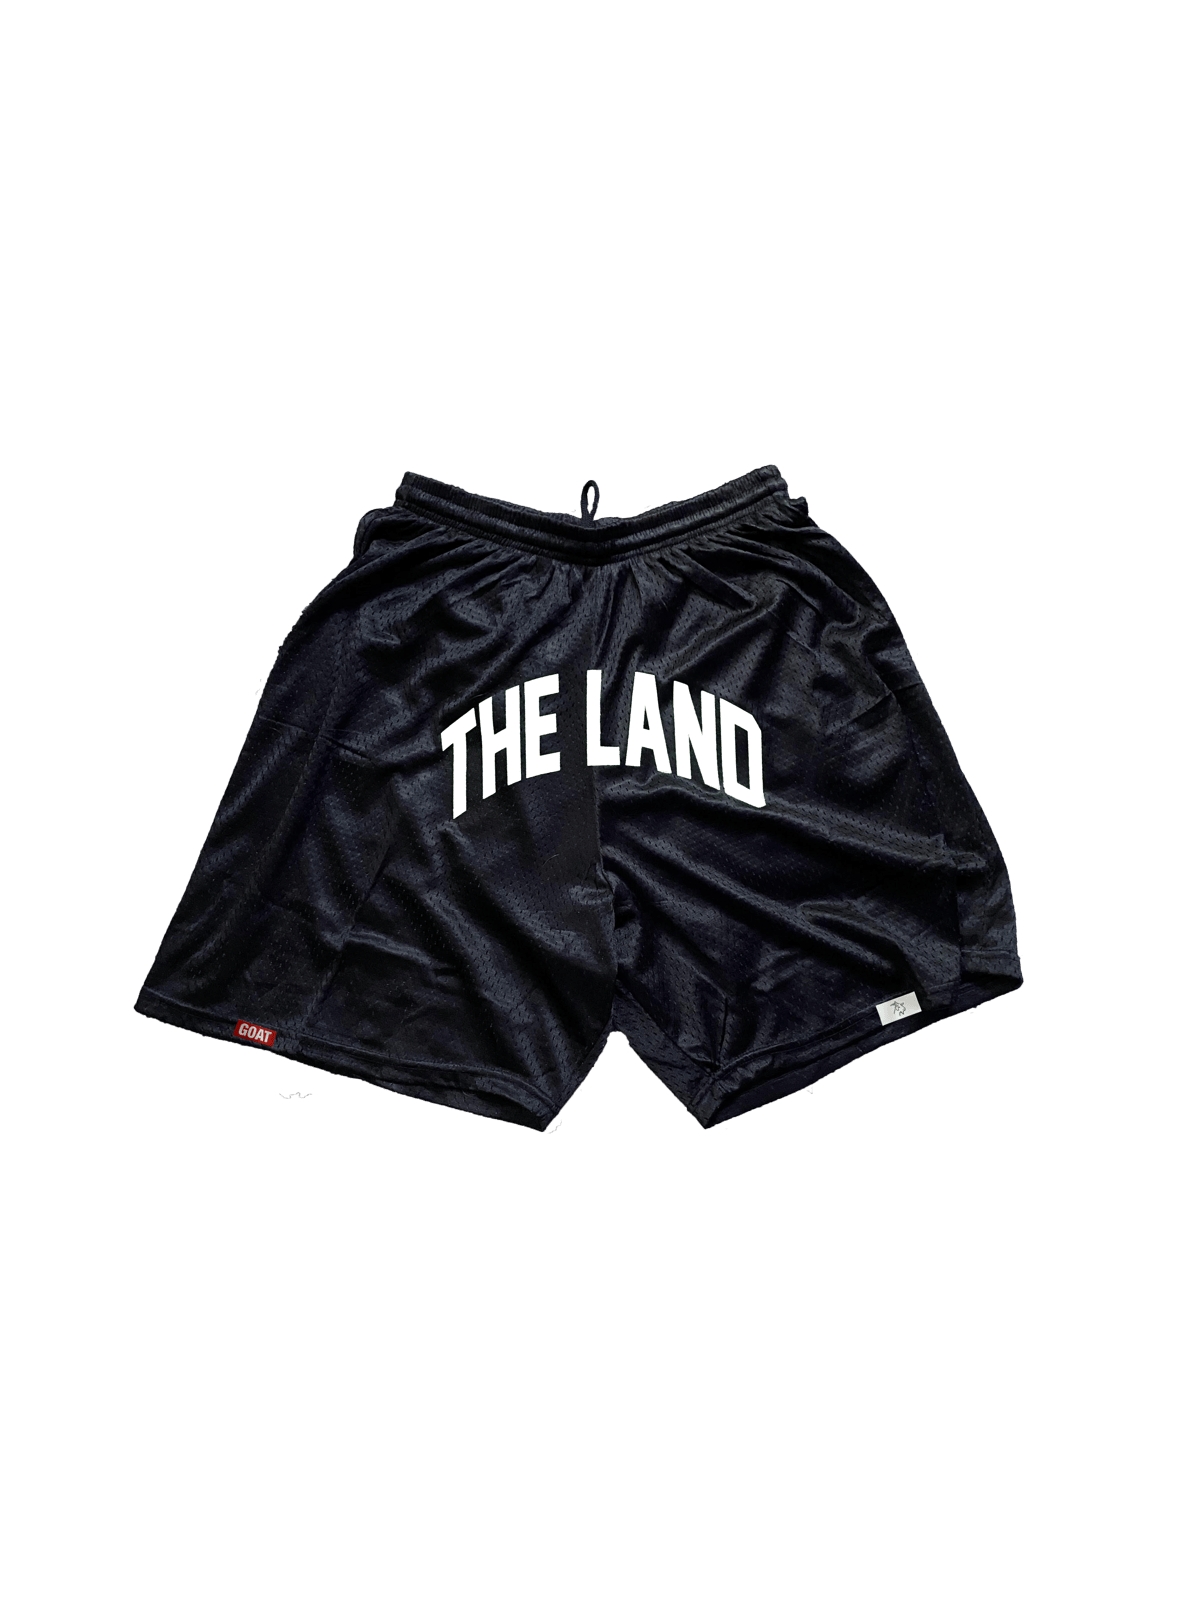 THE LAND Black Shorts